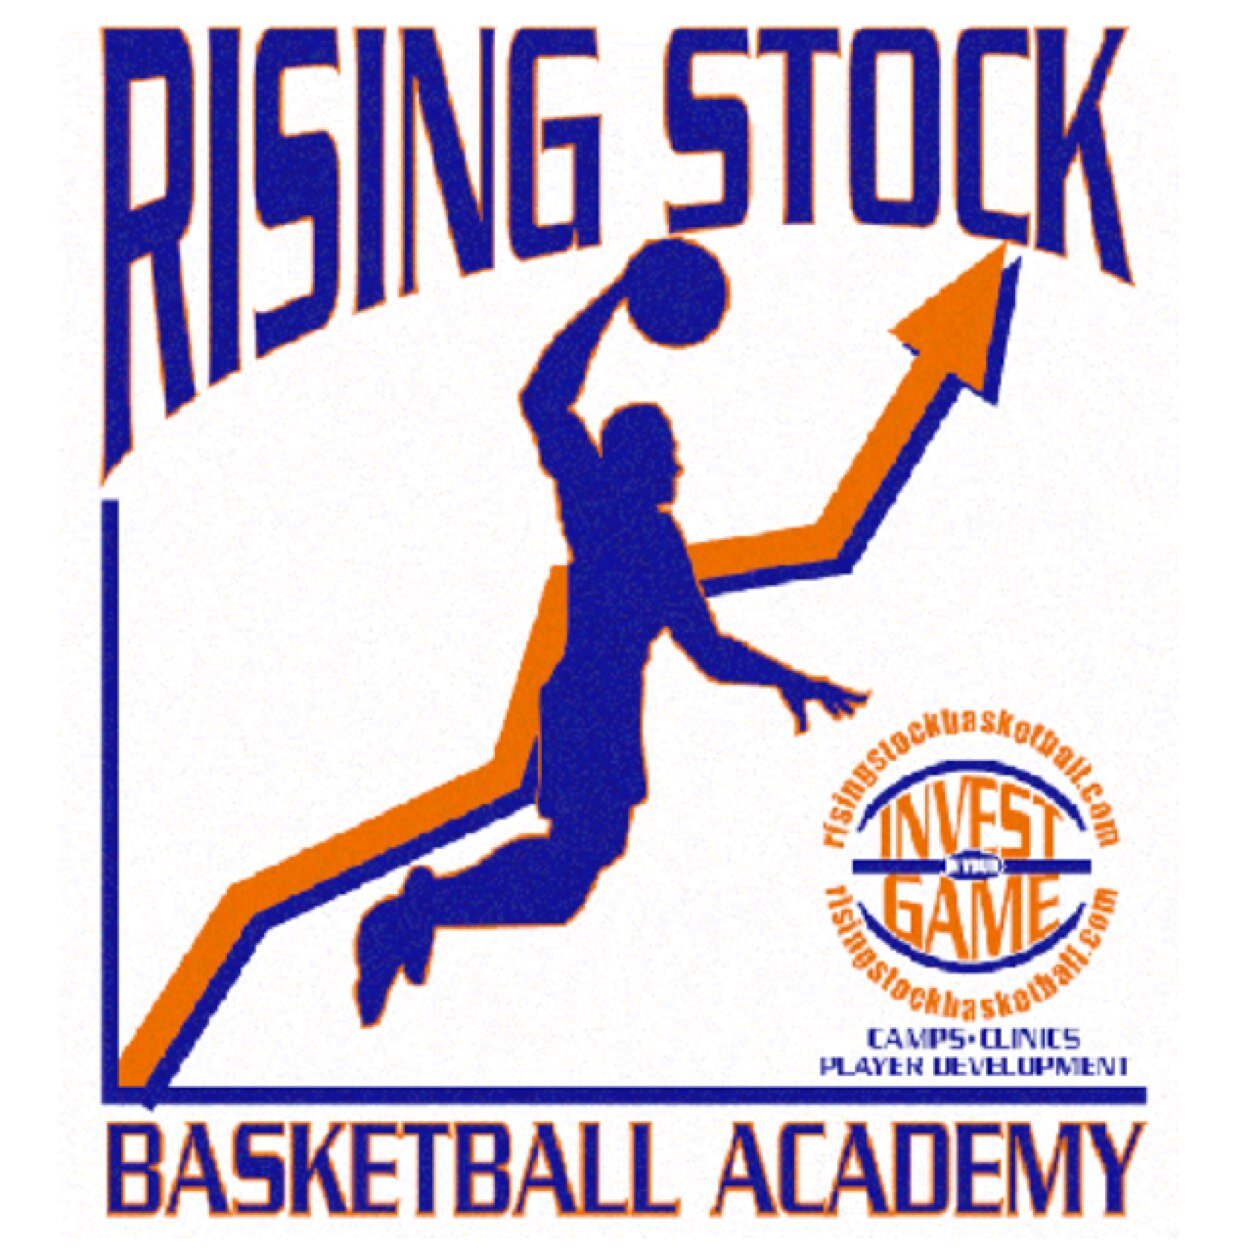 Rising Stock Basketball Academy